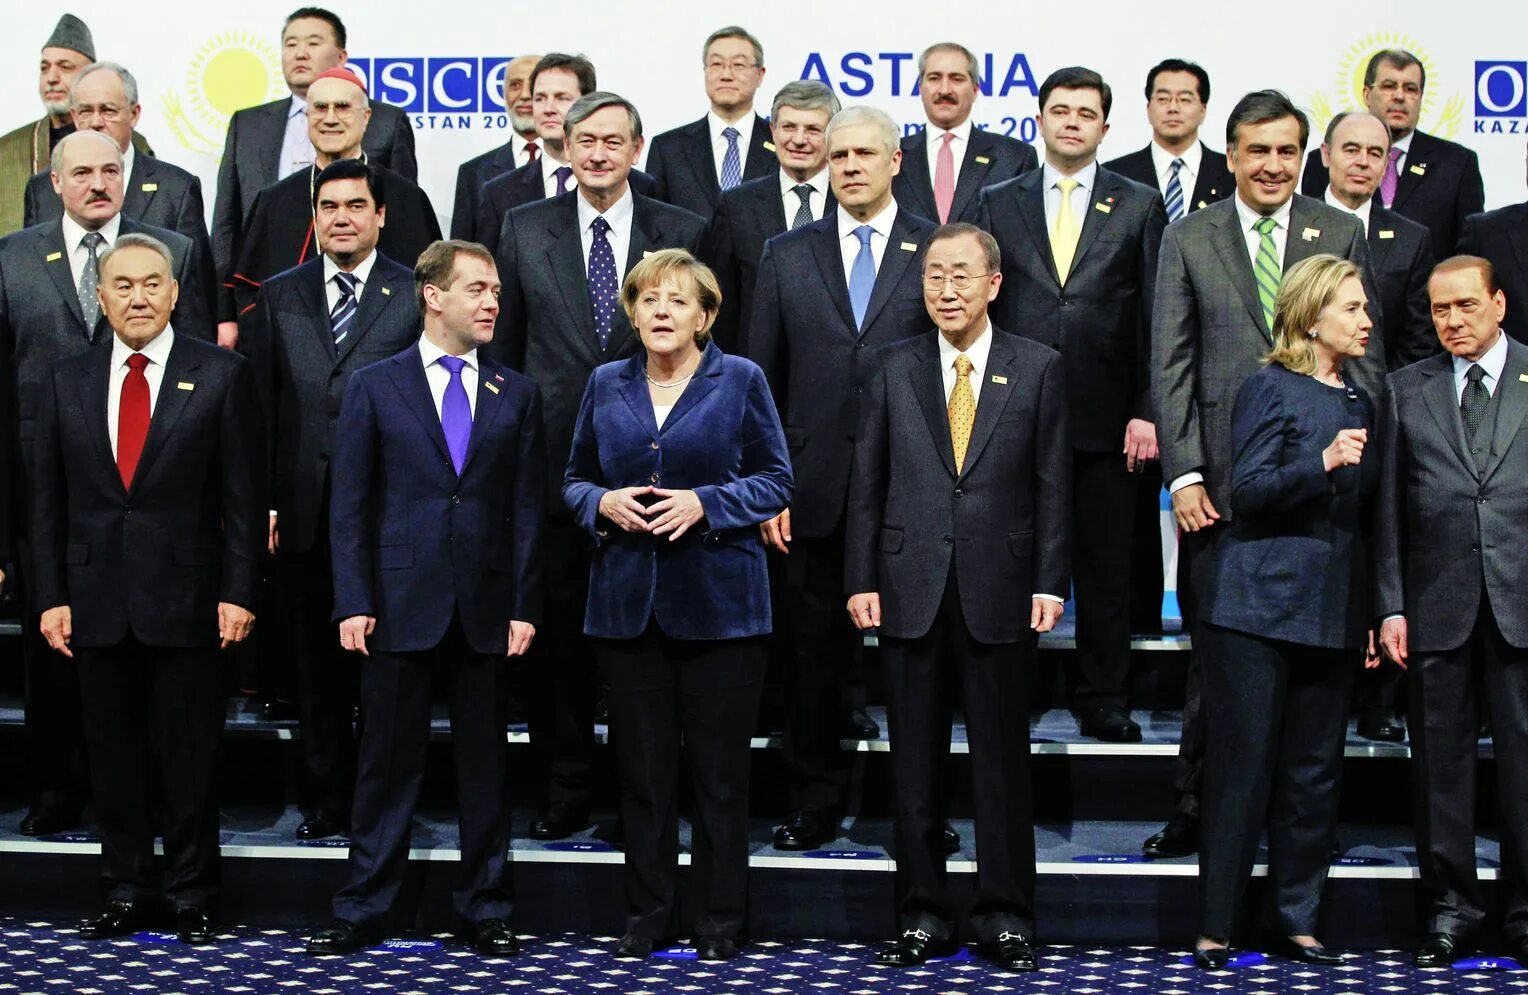 Саммит ОБСЕ Астана 2010. Саммит ОБСЕ В Астане. Саммит 1999. Новости бизнеса политики